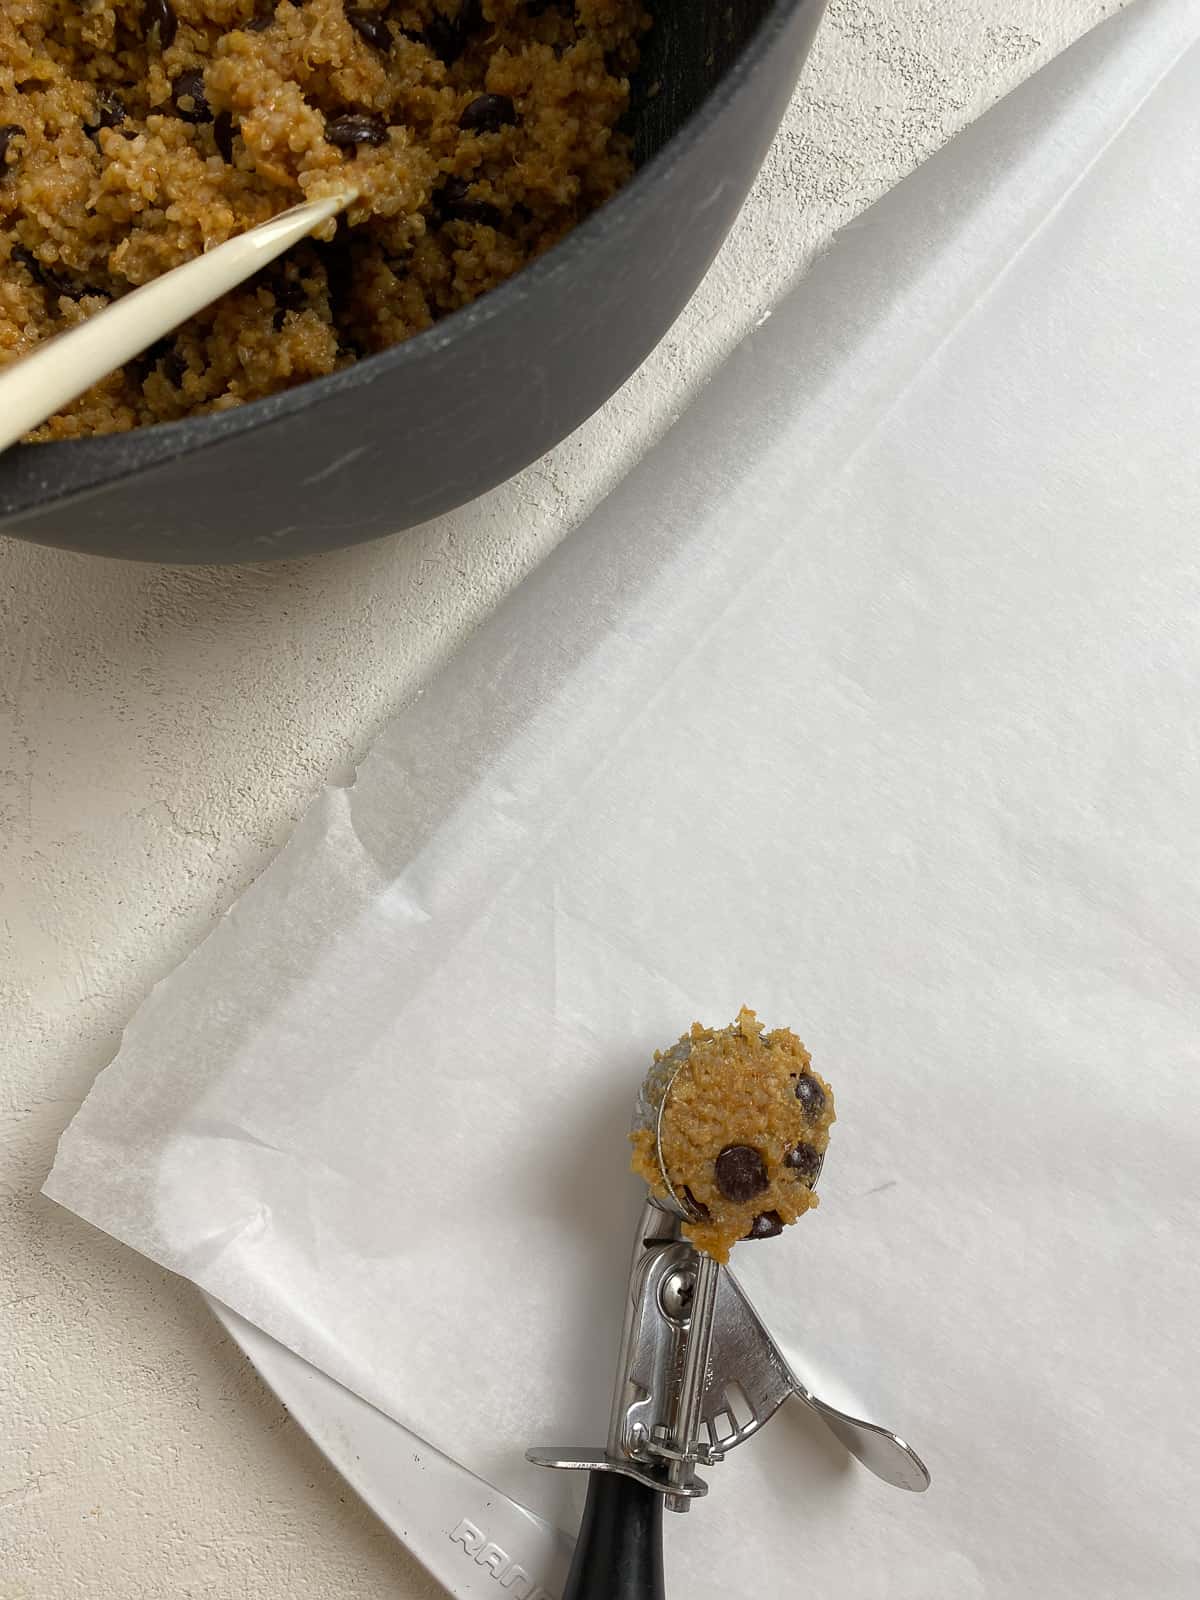 process of adding Vegan Chocolate Chip Quinoa Cookies on baking sheet